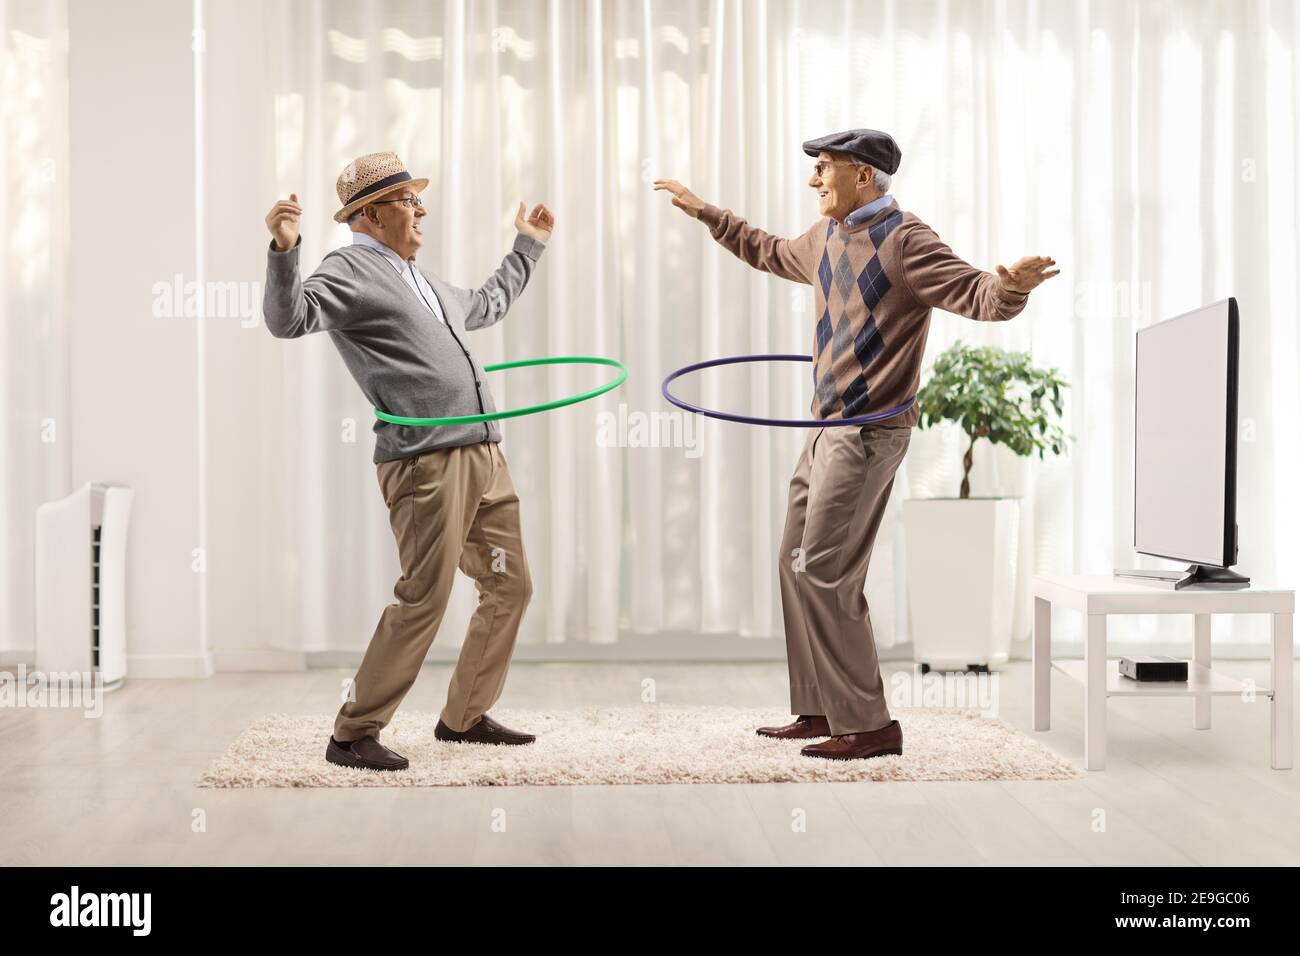 https://c8.alamy.com/comp/2E9GC06/funny-elderly-men-spinning-hula-hoops-inside-a-room-2E9GC06.jpg